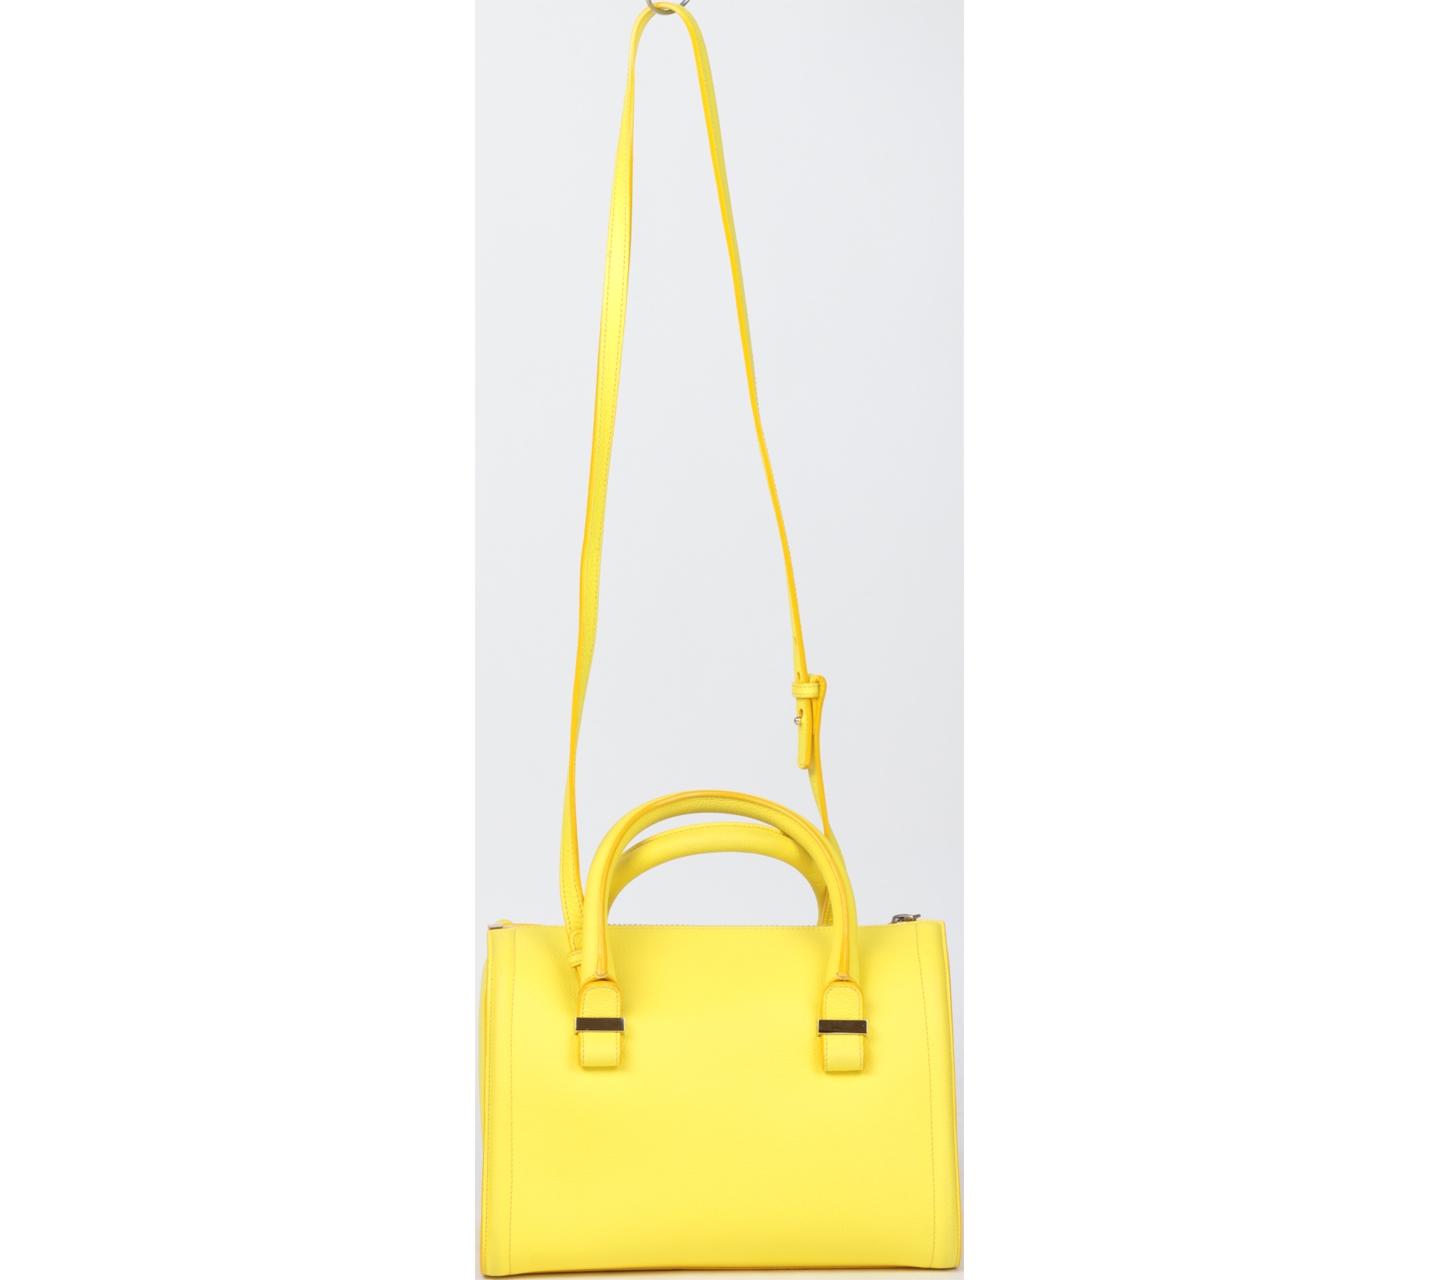 Victoria Beckham Yellow Handbag